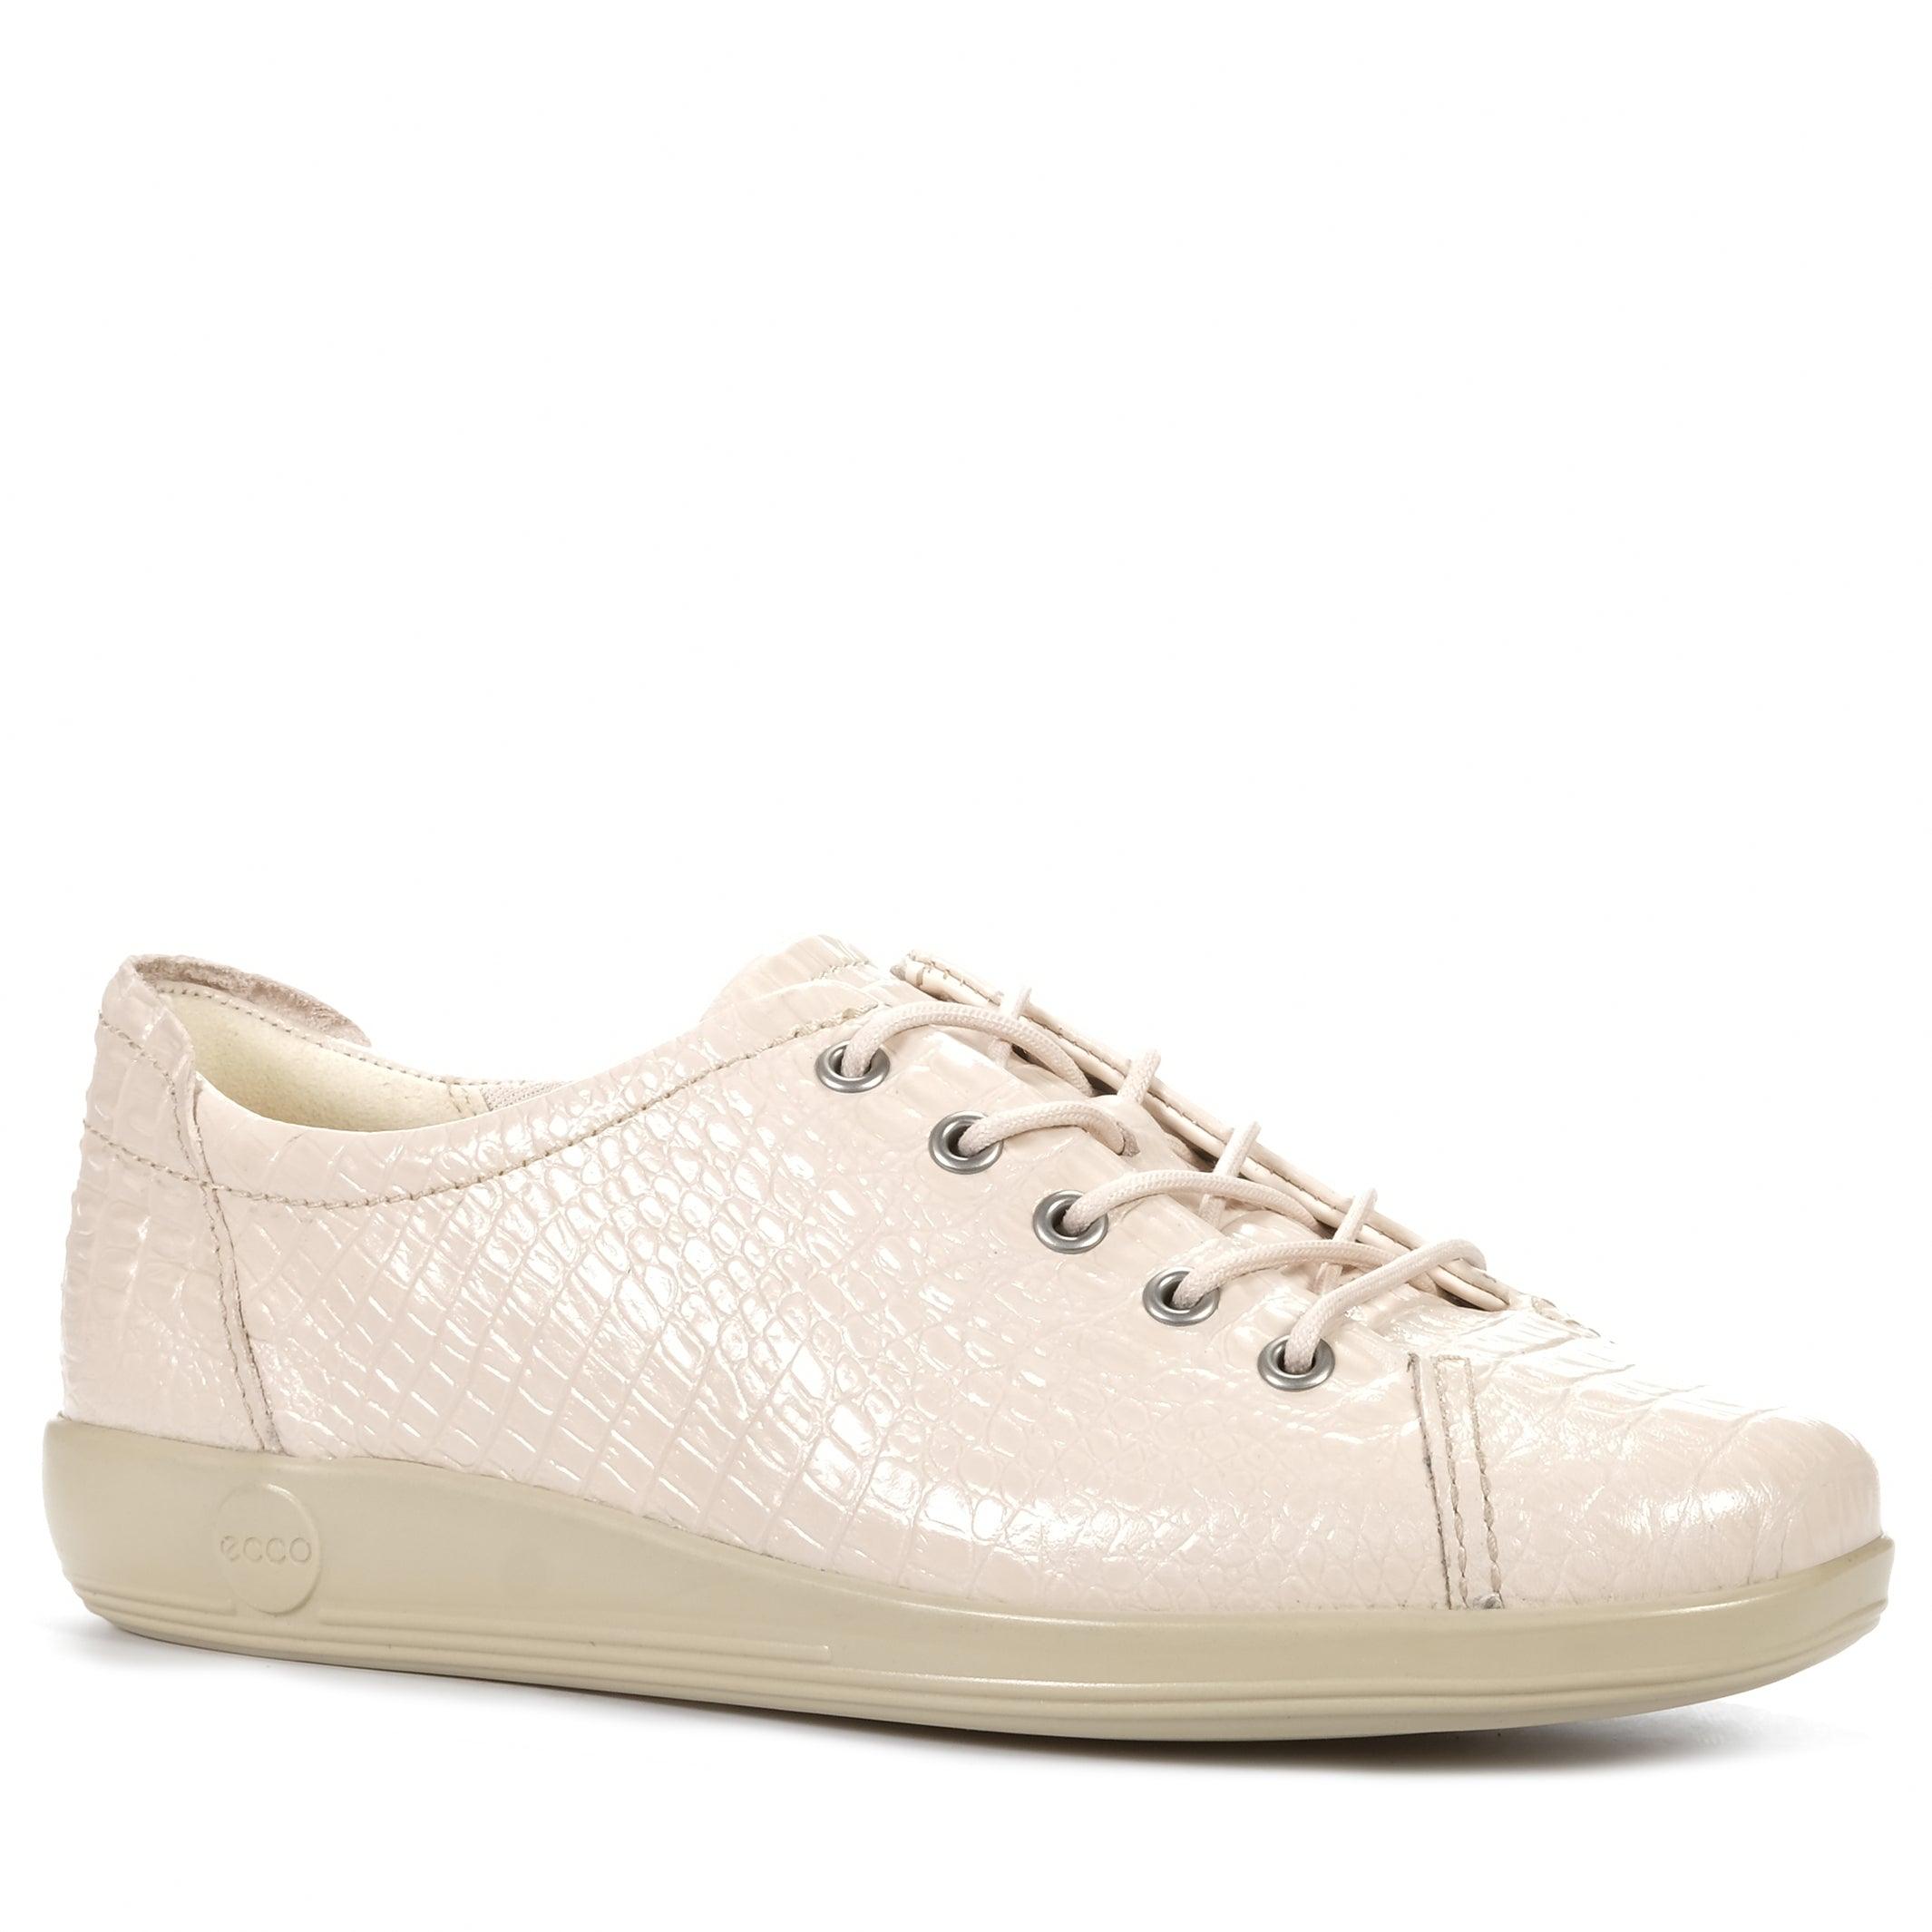 Ecco Soft 2.0 206503 Limestone | Footwear | Reviews on Judge.me